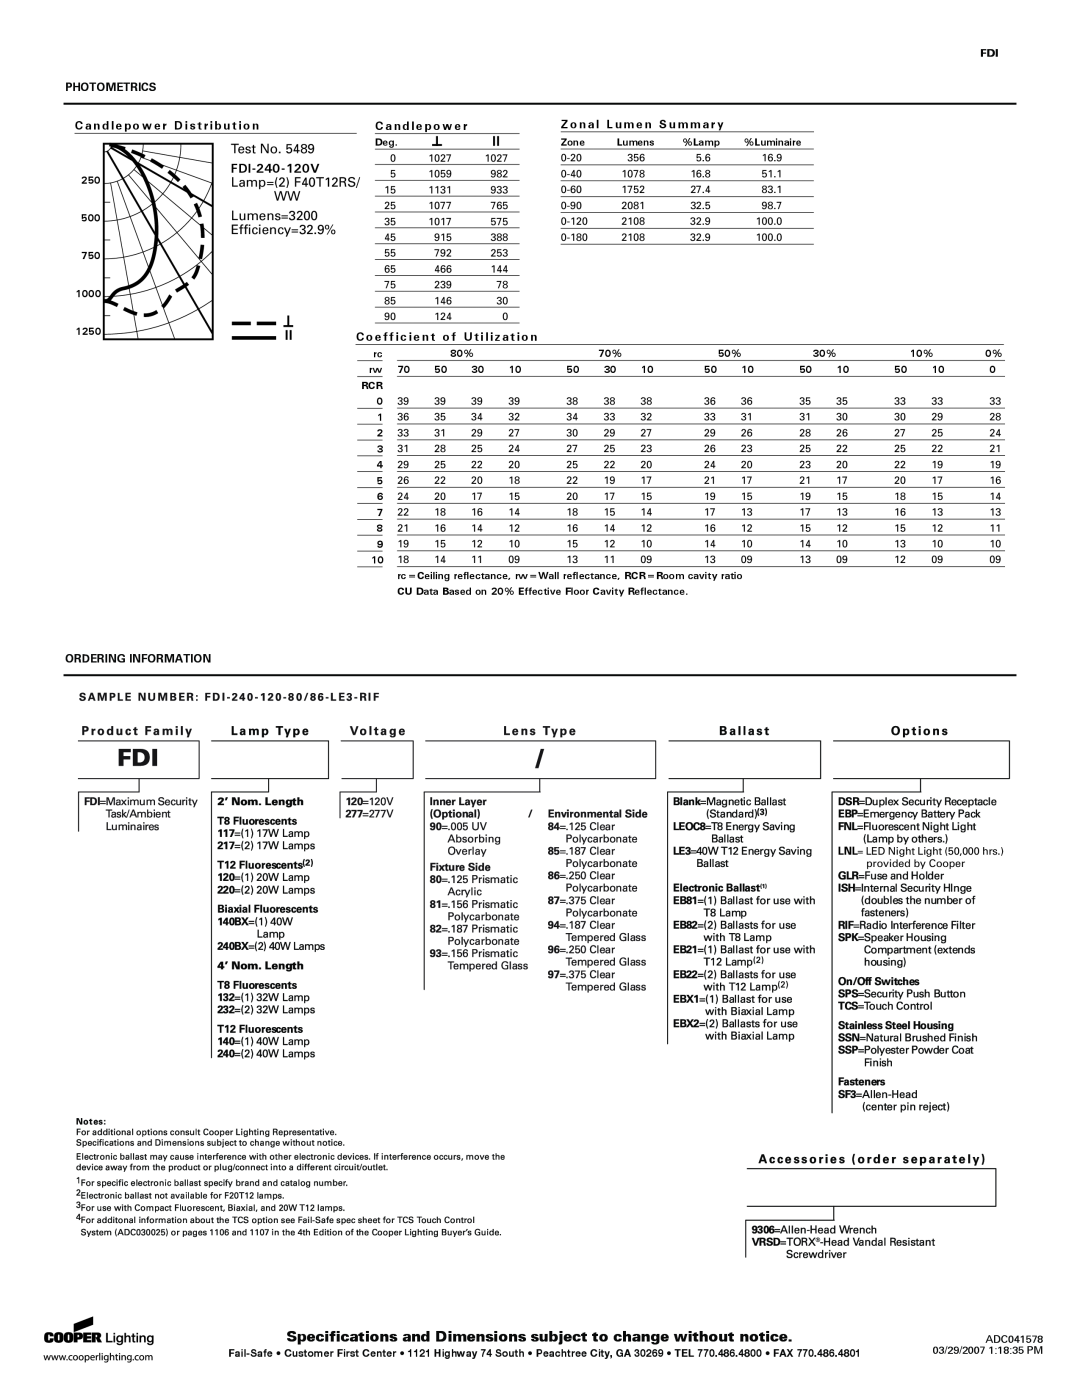 Cooper Lighting FDI specifications Photometrics, Candlepower Distribution, Zonal Lumen Summary, Coefficient of Utilization 